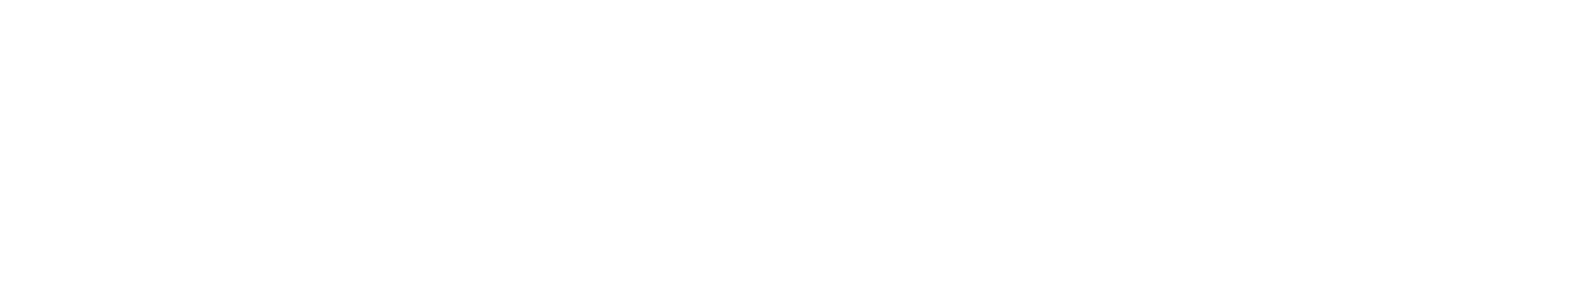 Community Trust Bancorp logo large for dark backgrounds (transparent PNG)